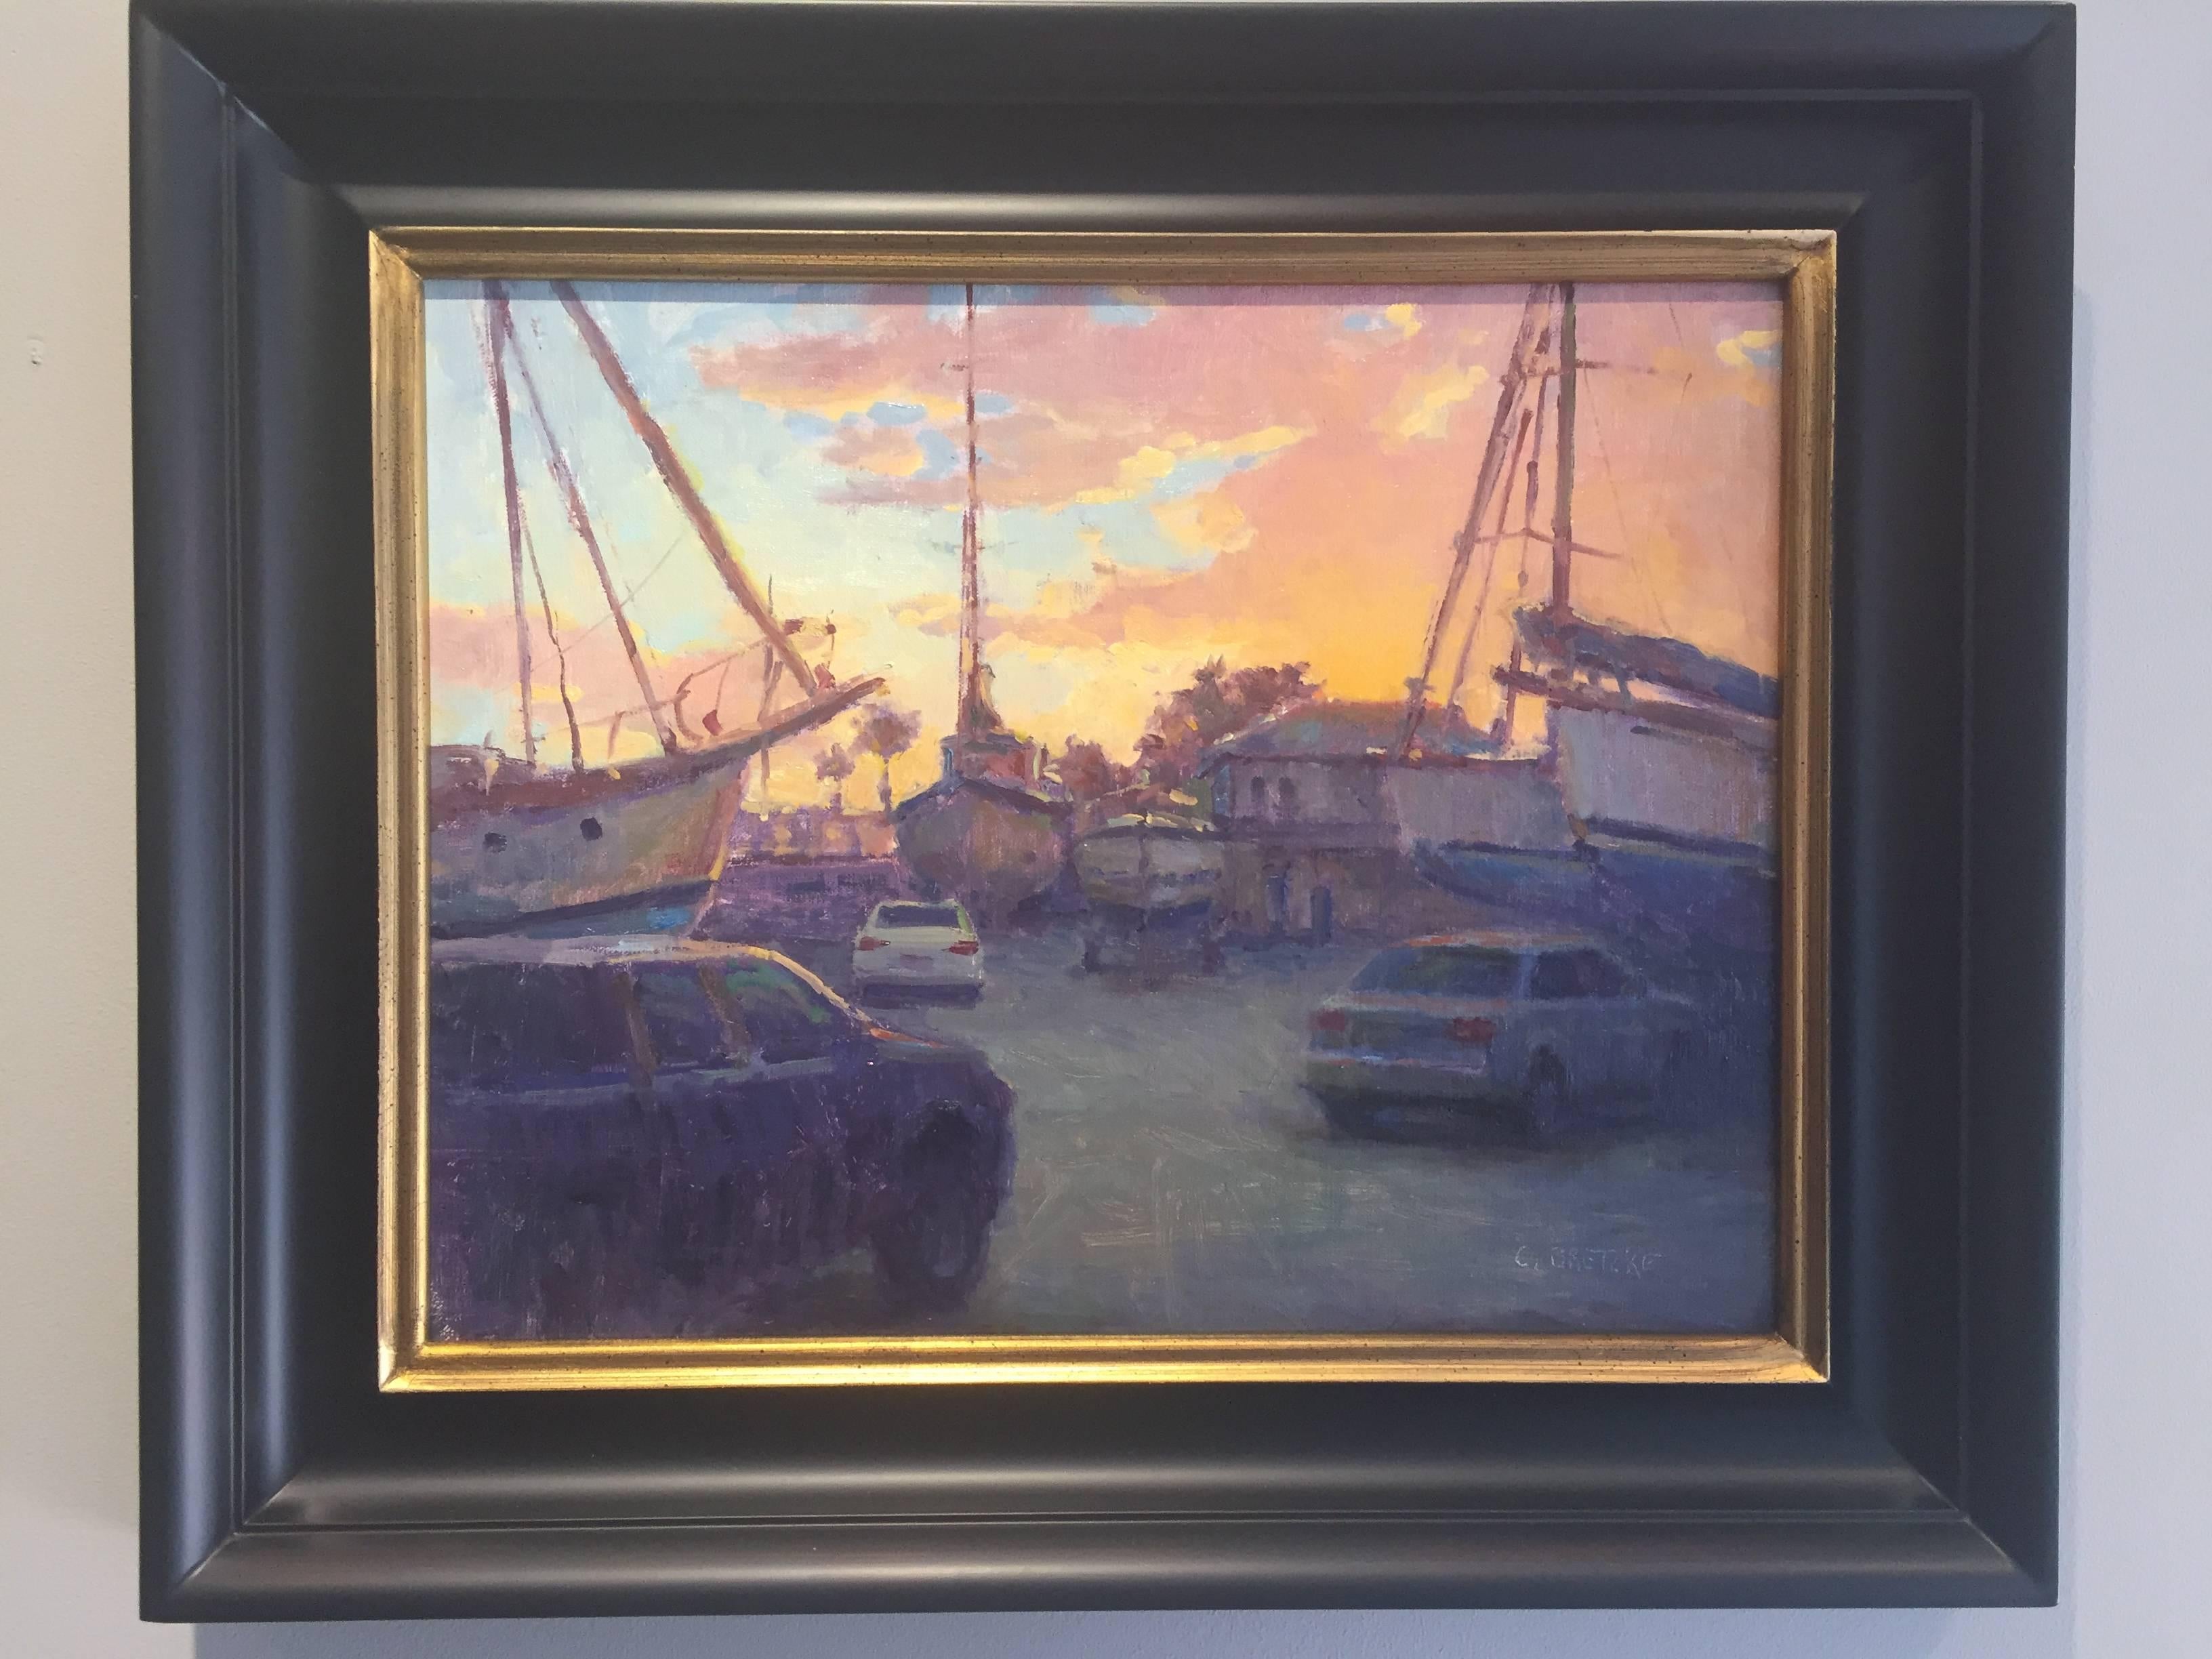 Boat Yard Sunset - Painting by Carl Bretzke